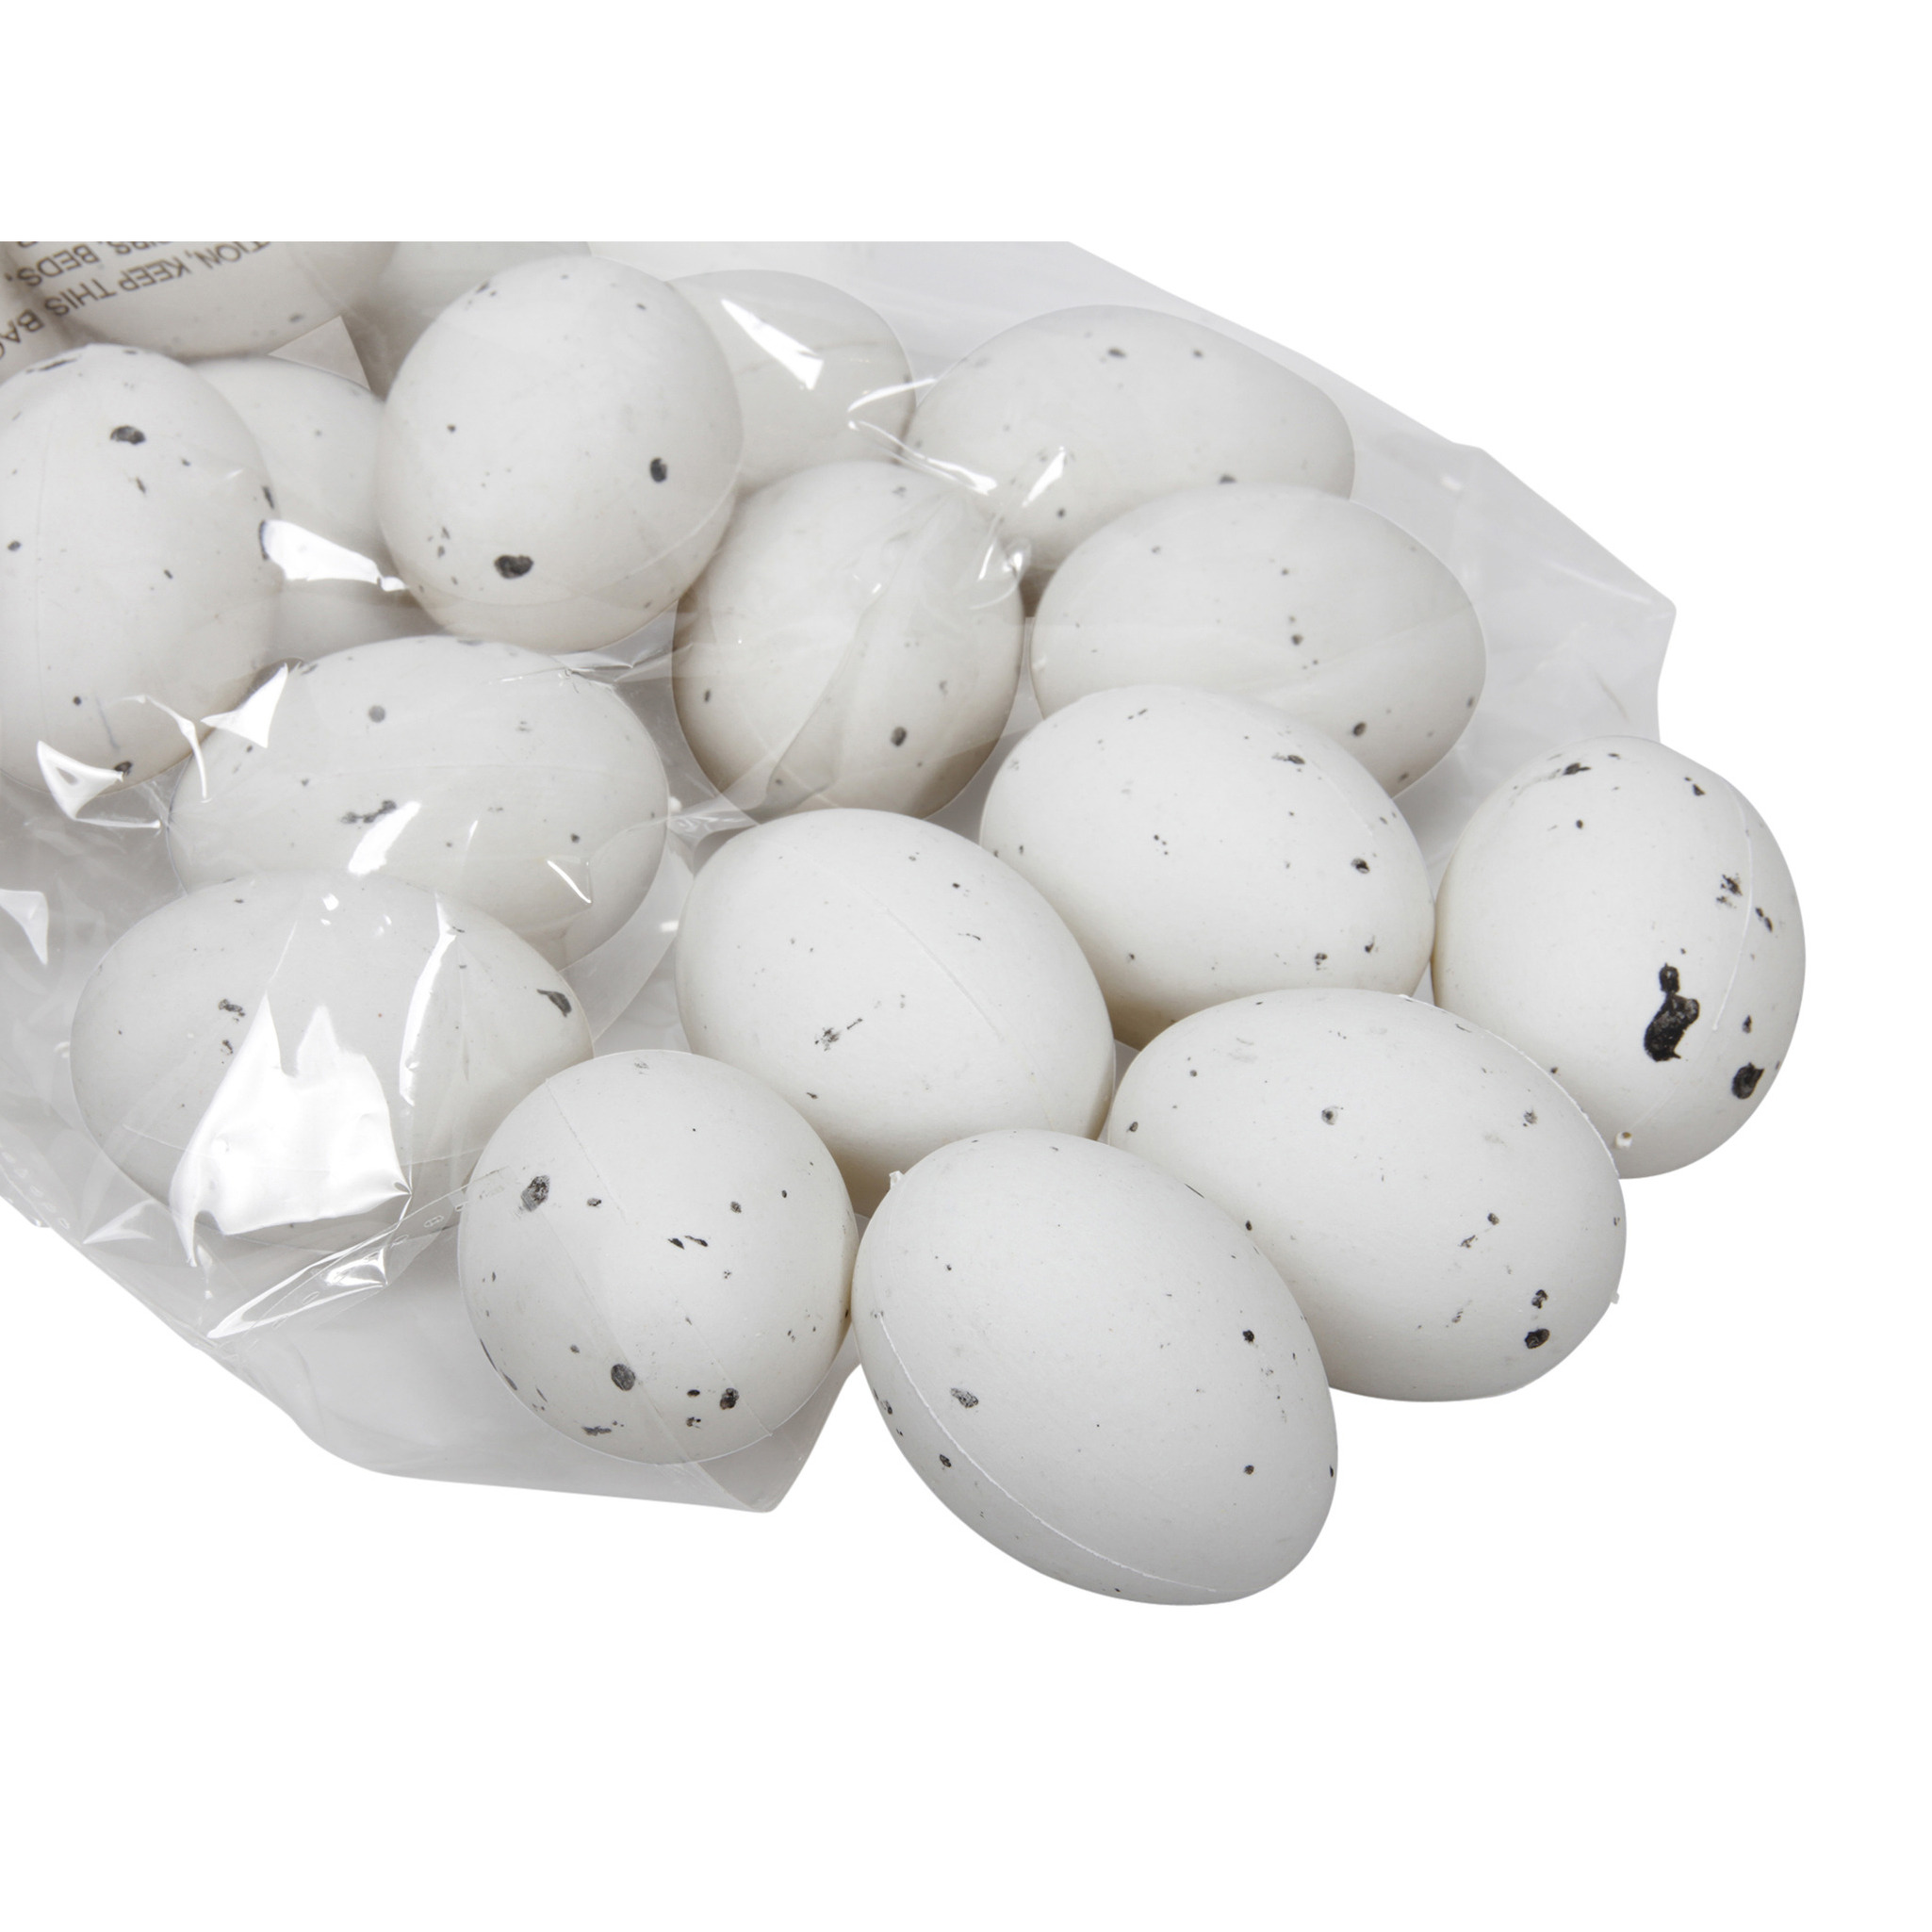 24x stuks decoratie eieren plastic H6 cm wit